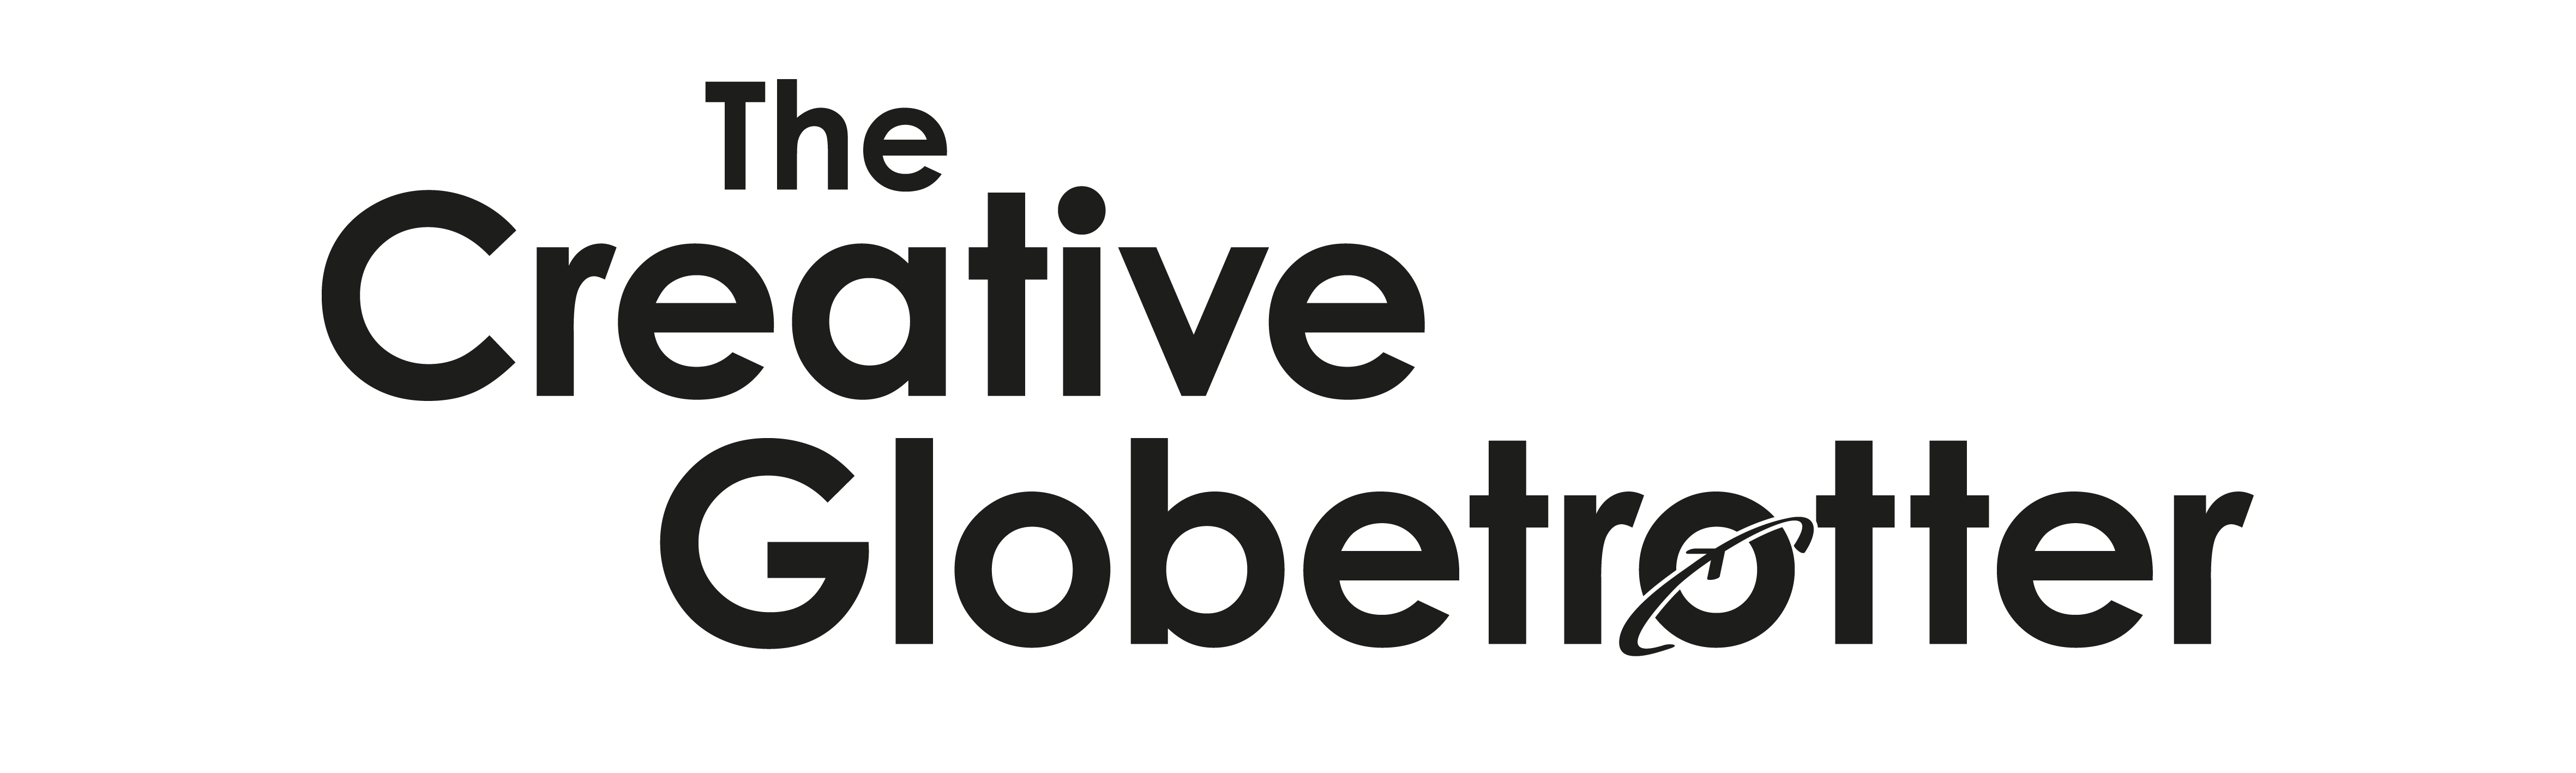 The Creative Globetrotter